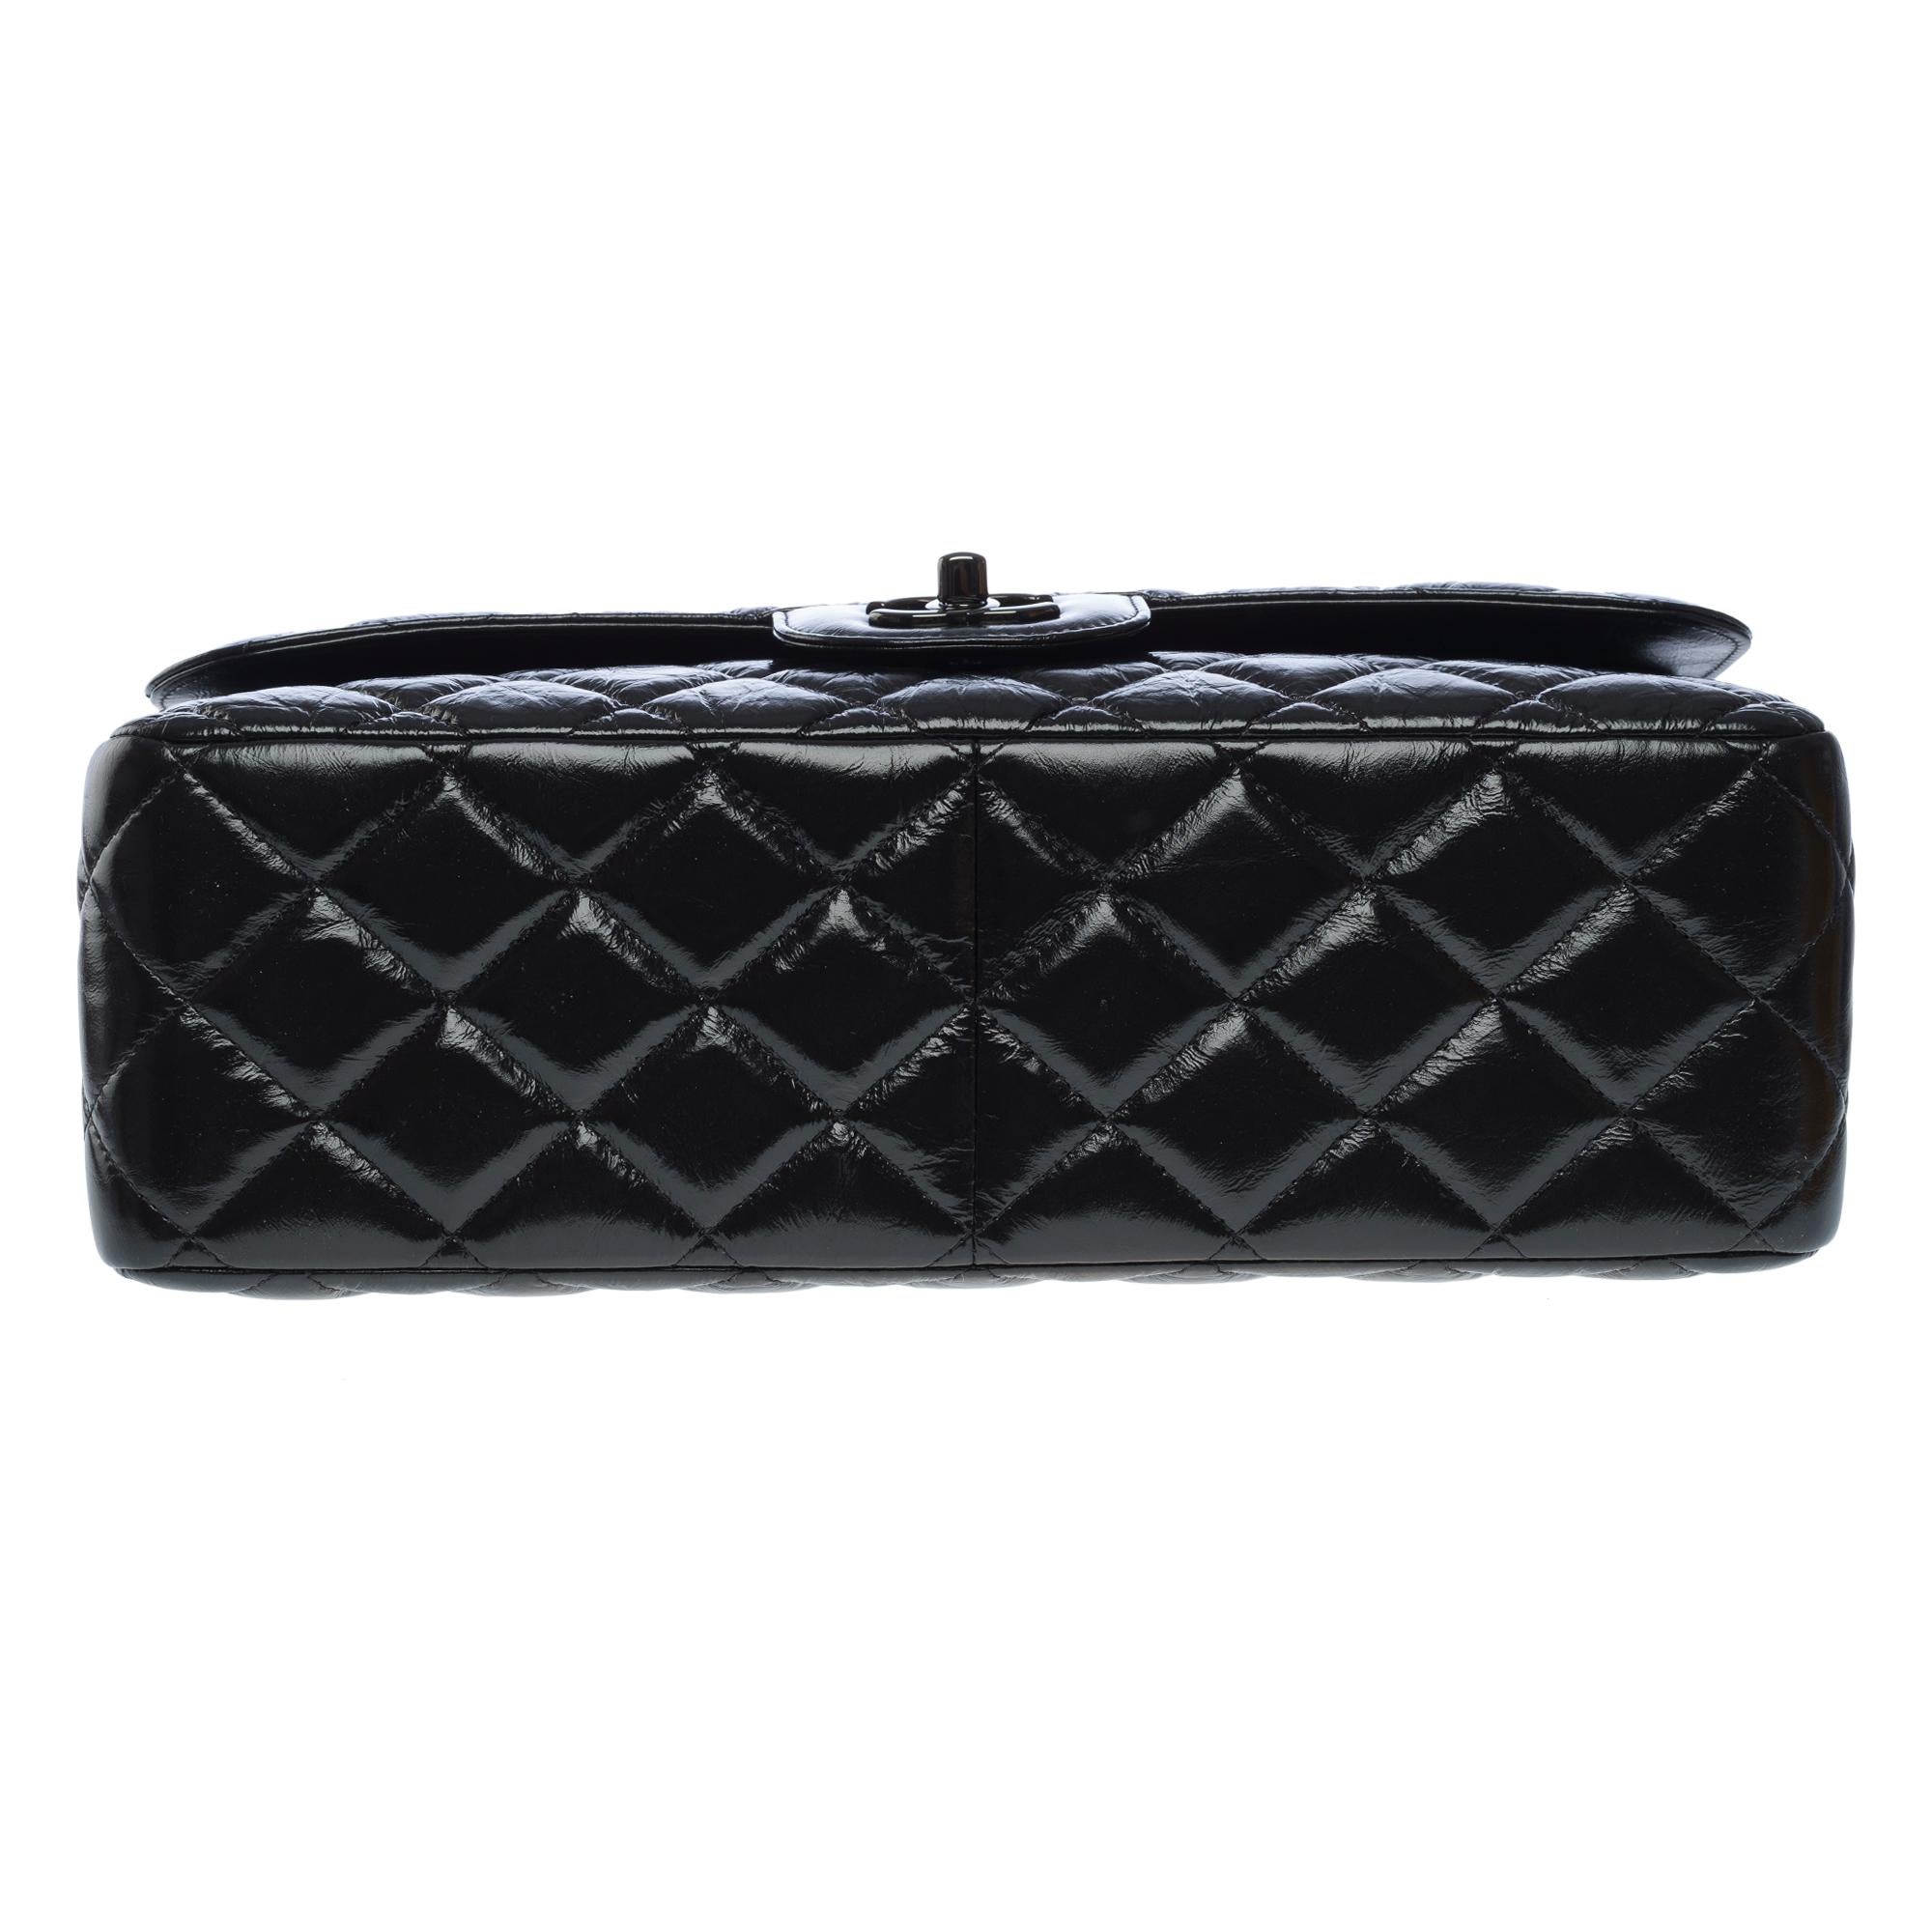 SO BLACK Chanel Timeless Jumbo double flap shoulder bag in Black Glazed leather 6